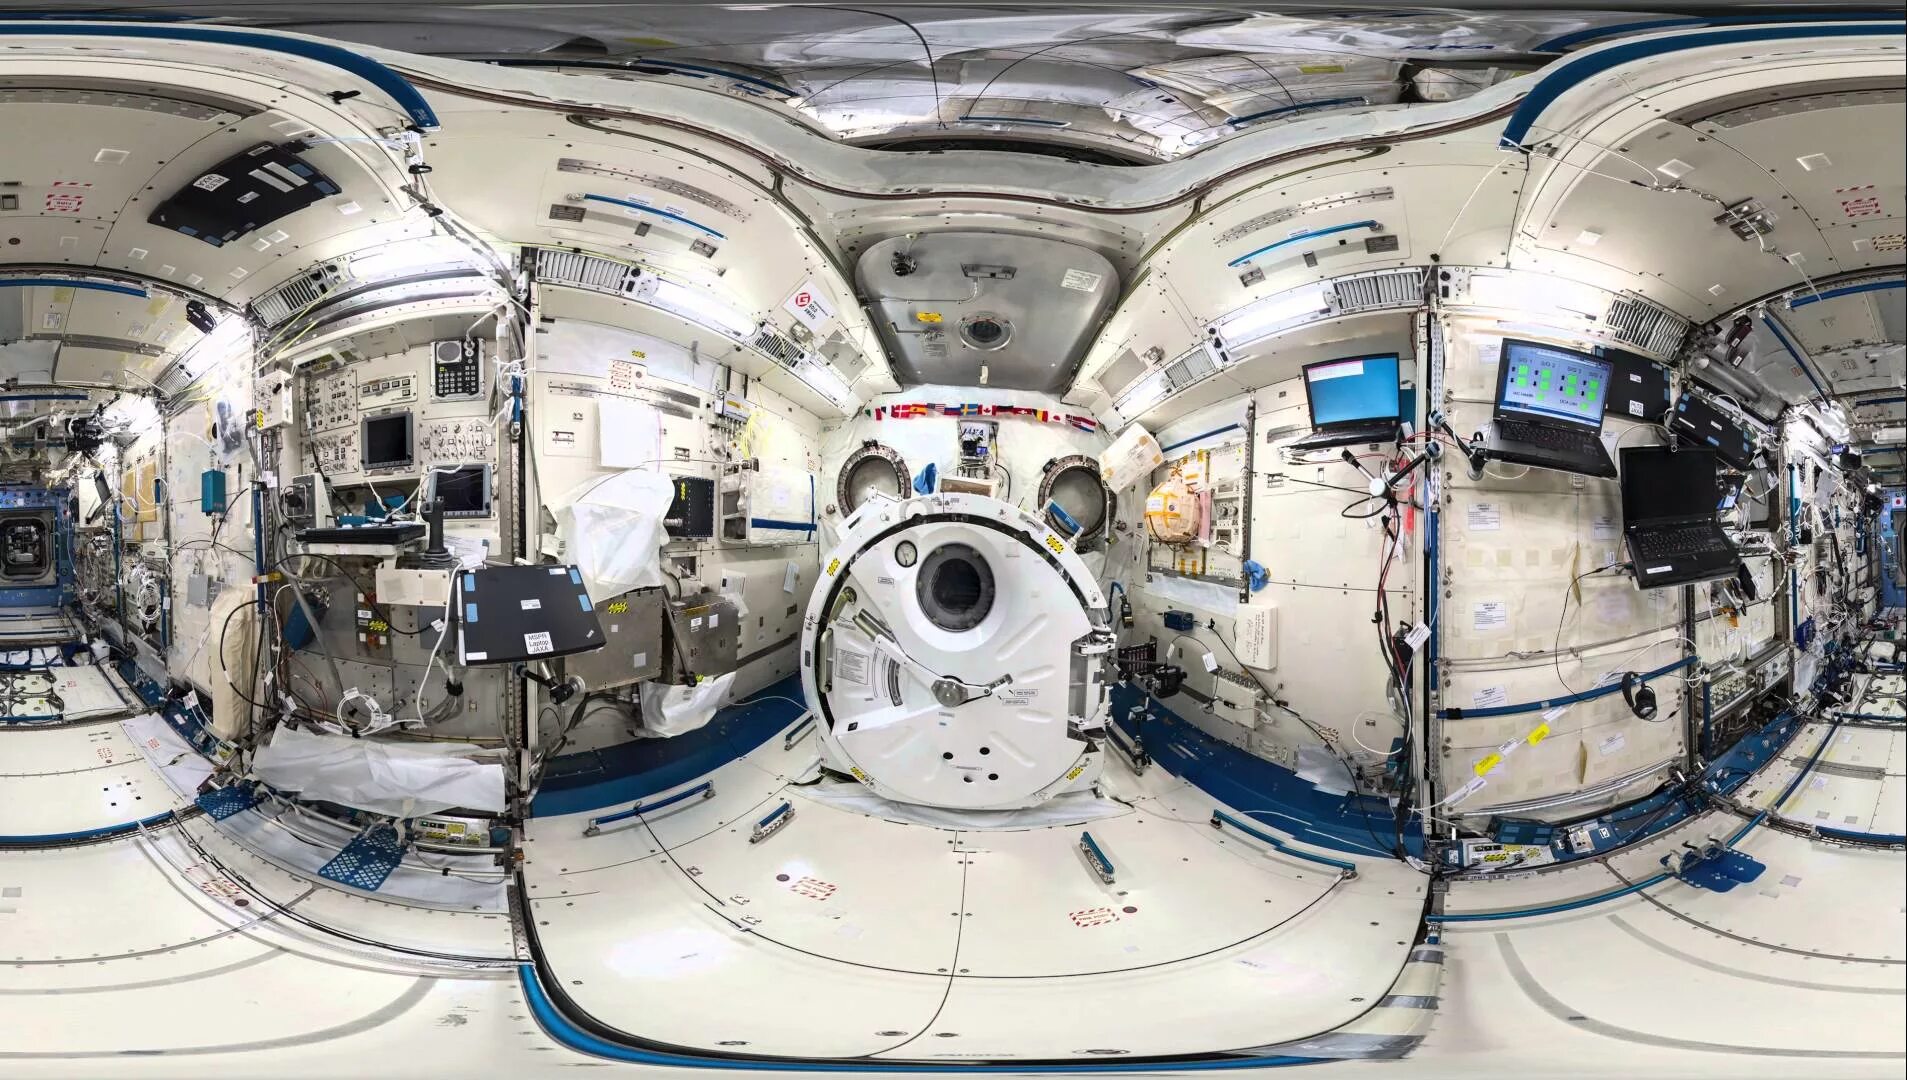 Панорамный модуль МКС. МКС 360°. Внутри МКС 360. Японский модуль КИБО на МКС.